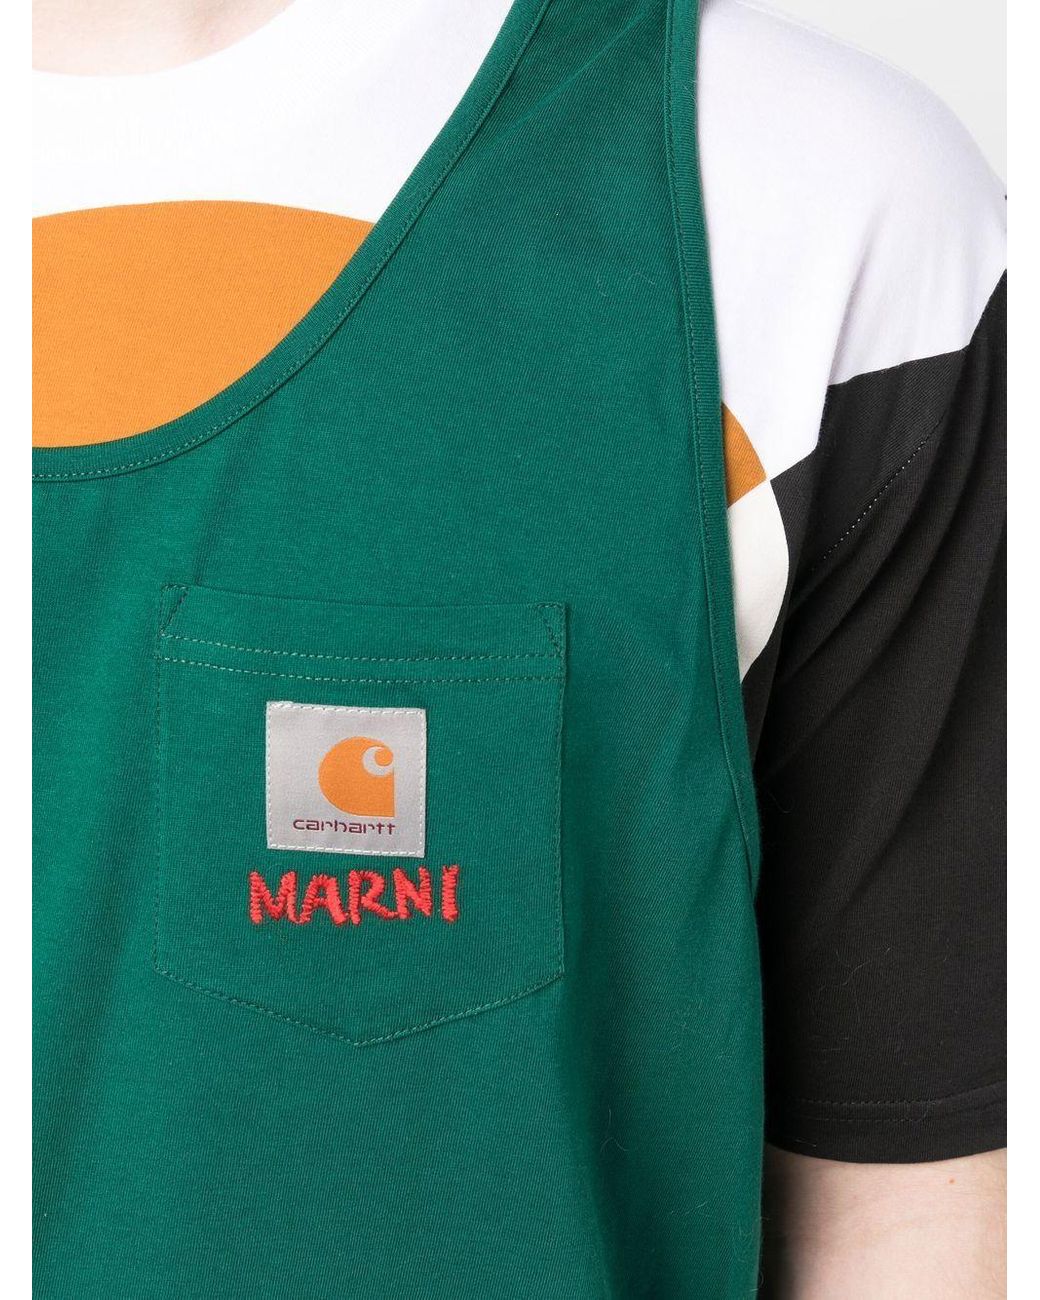 Marni x Carhartt WIP Shirt 'Tobacco' | Brown | Men's Size Medium